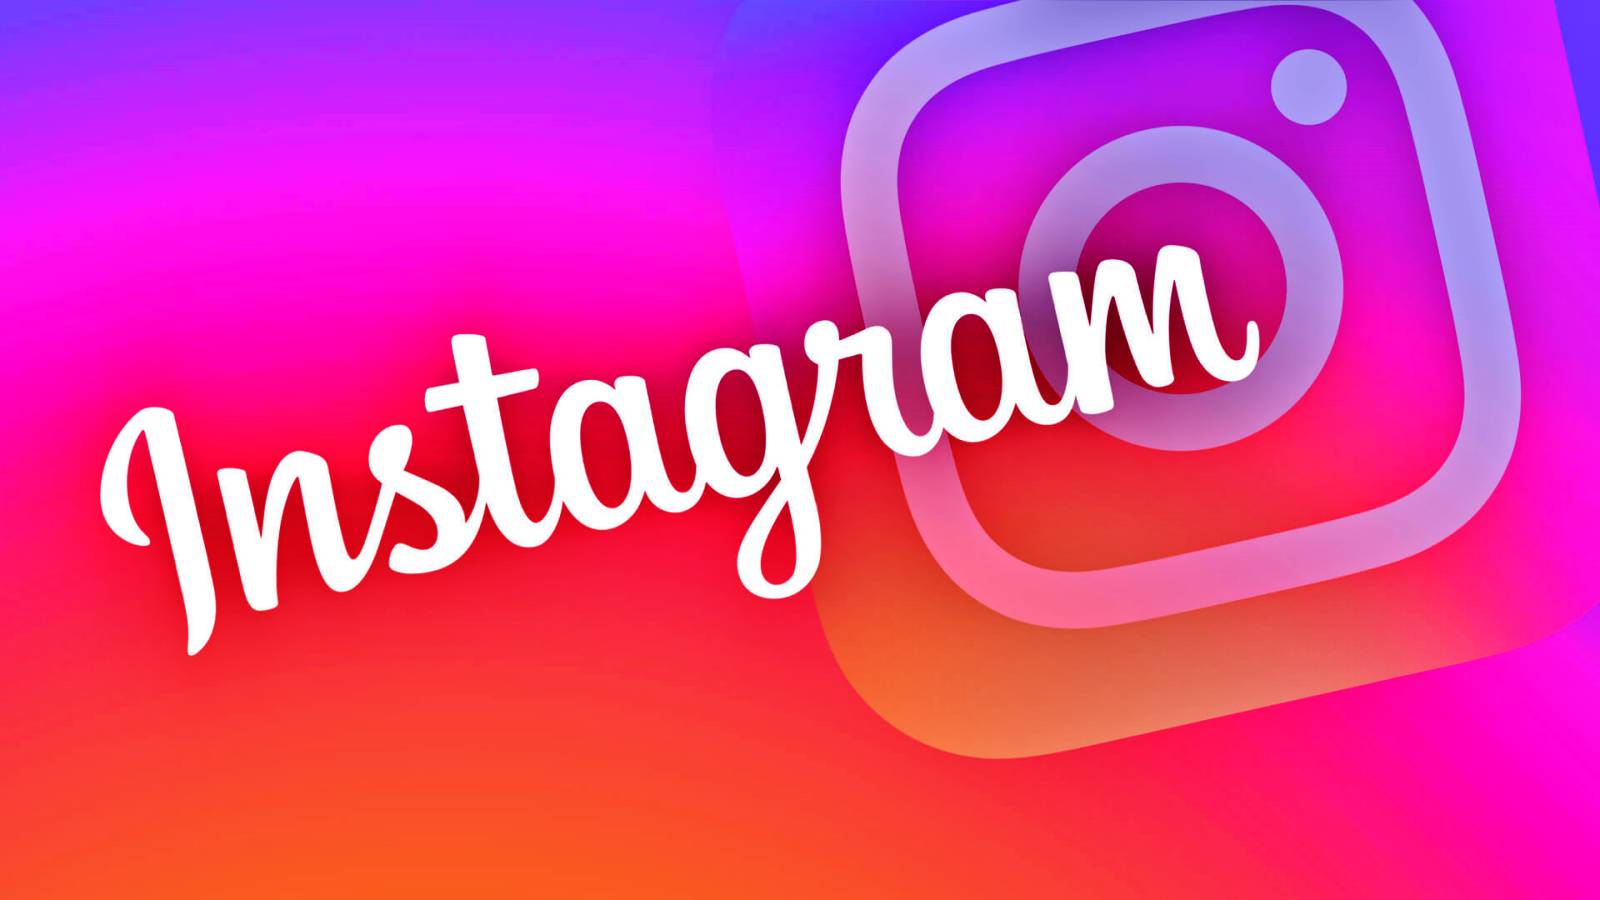 Instagram isi Actualizeaza Aplicatia, ce Schimbari sunt Oferite in Telefoane